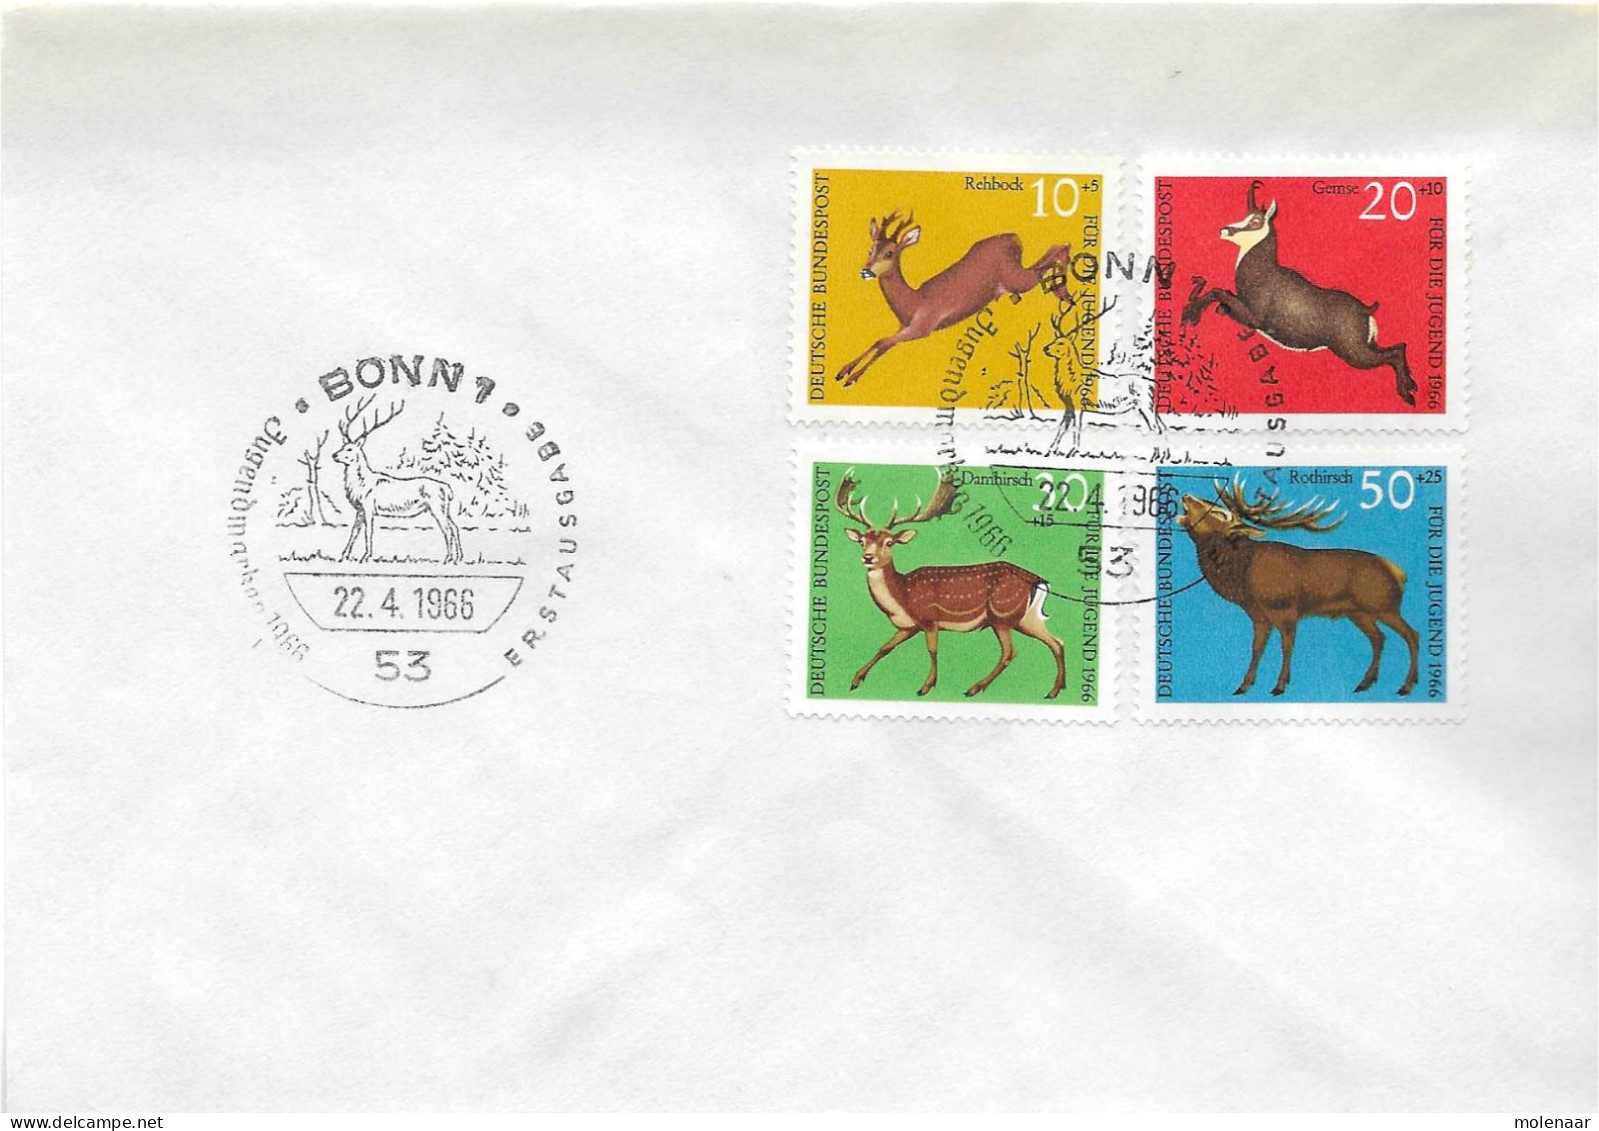 Postzegels > Europa > Duitsland > West-Duitsland > 1960-1969 > Brief Met No. 511-514 (17380) - Cartas & Documentos